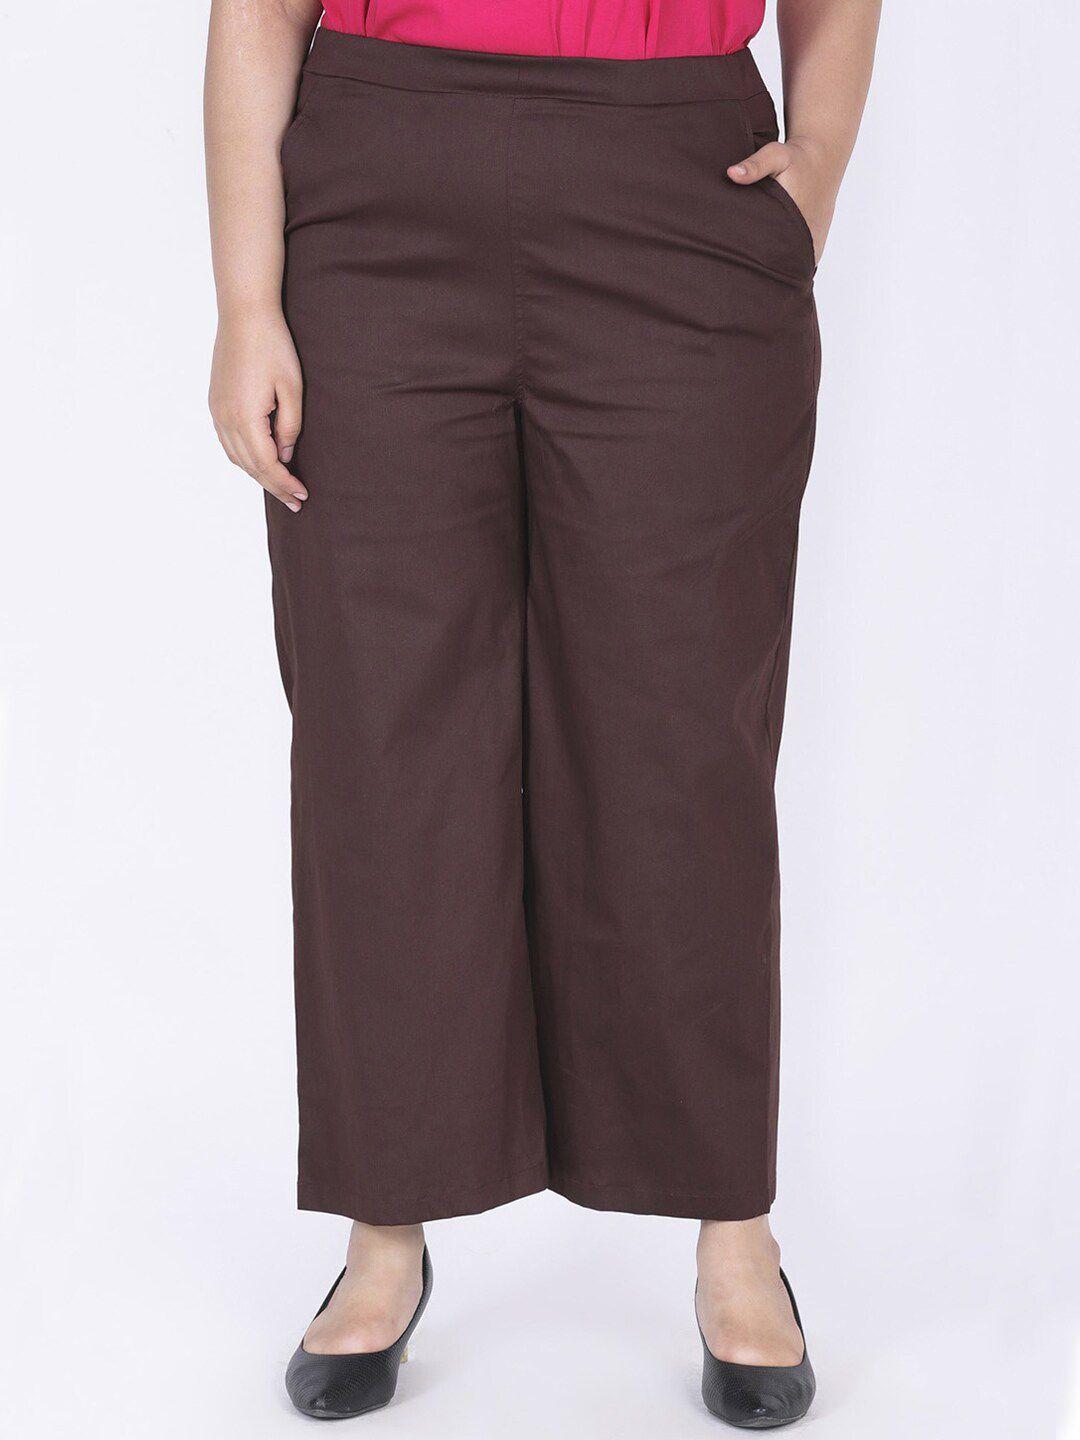 lastinch women brown comfort fit stretch pants